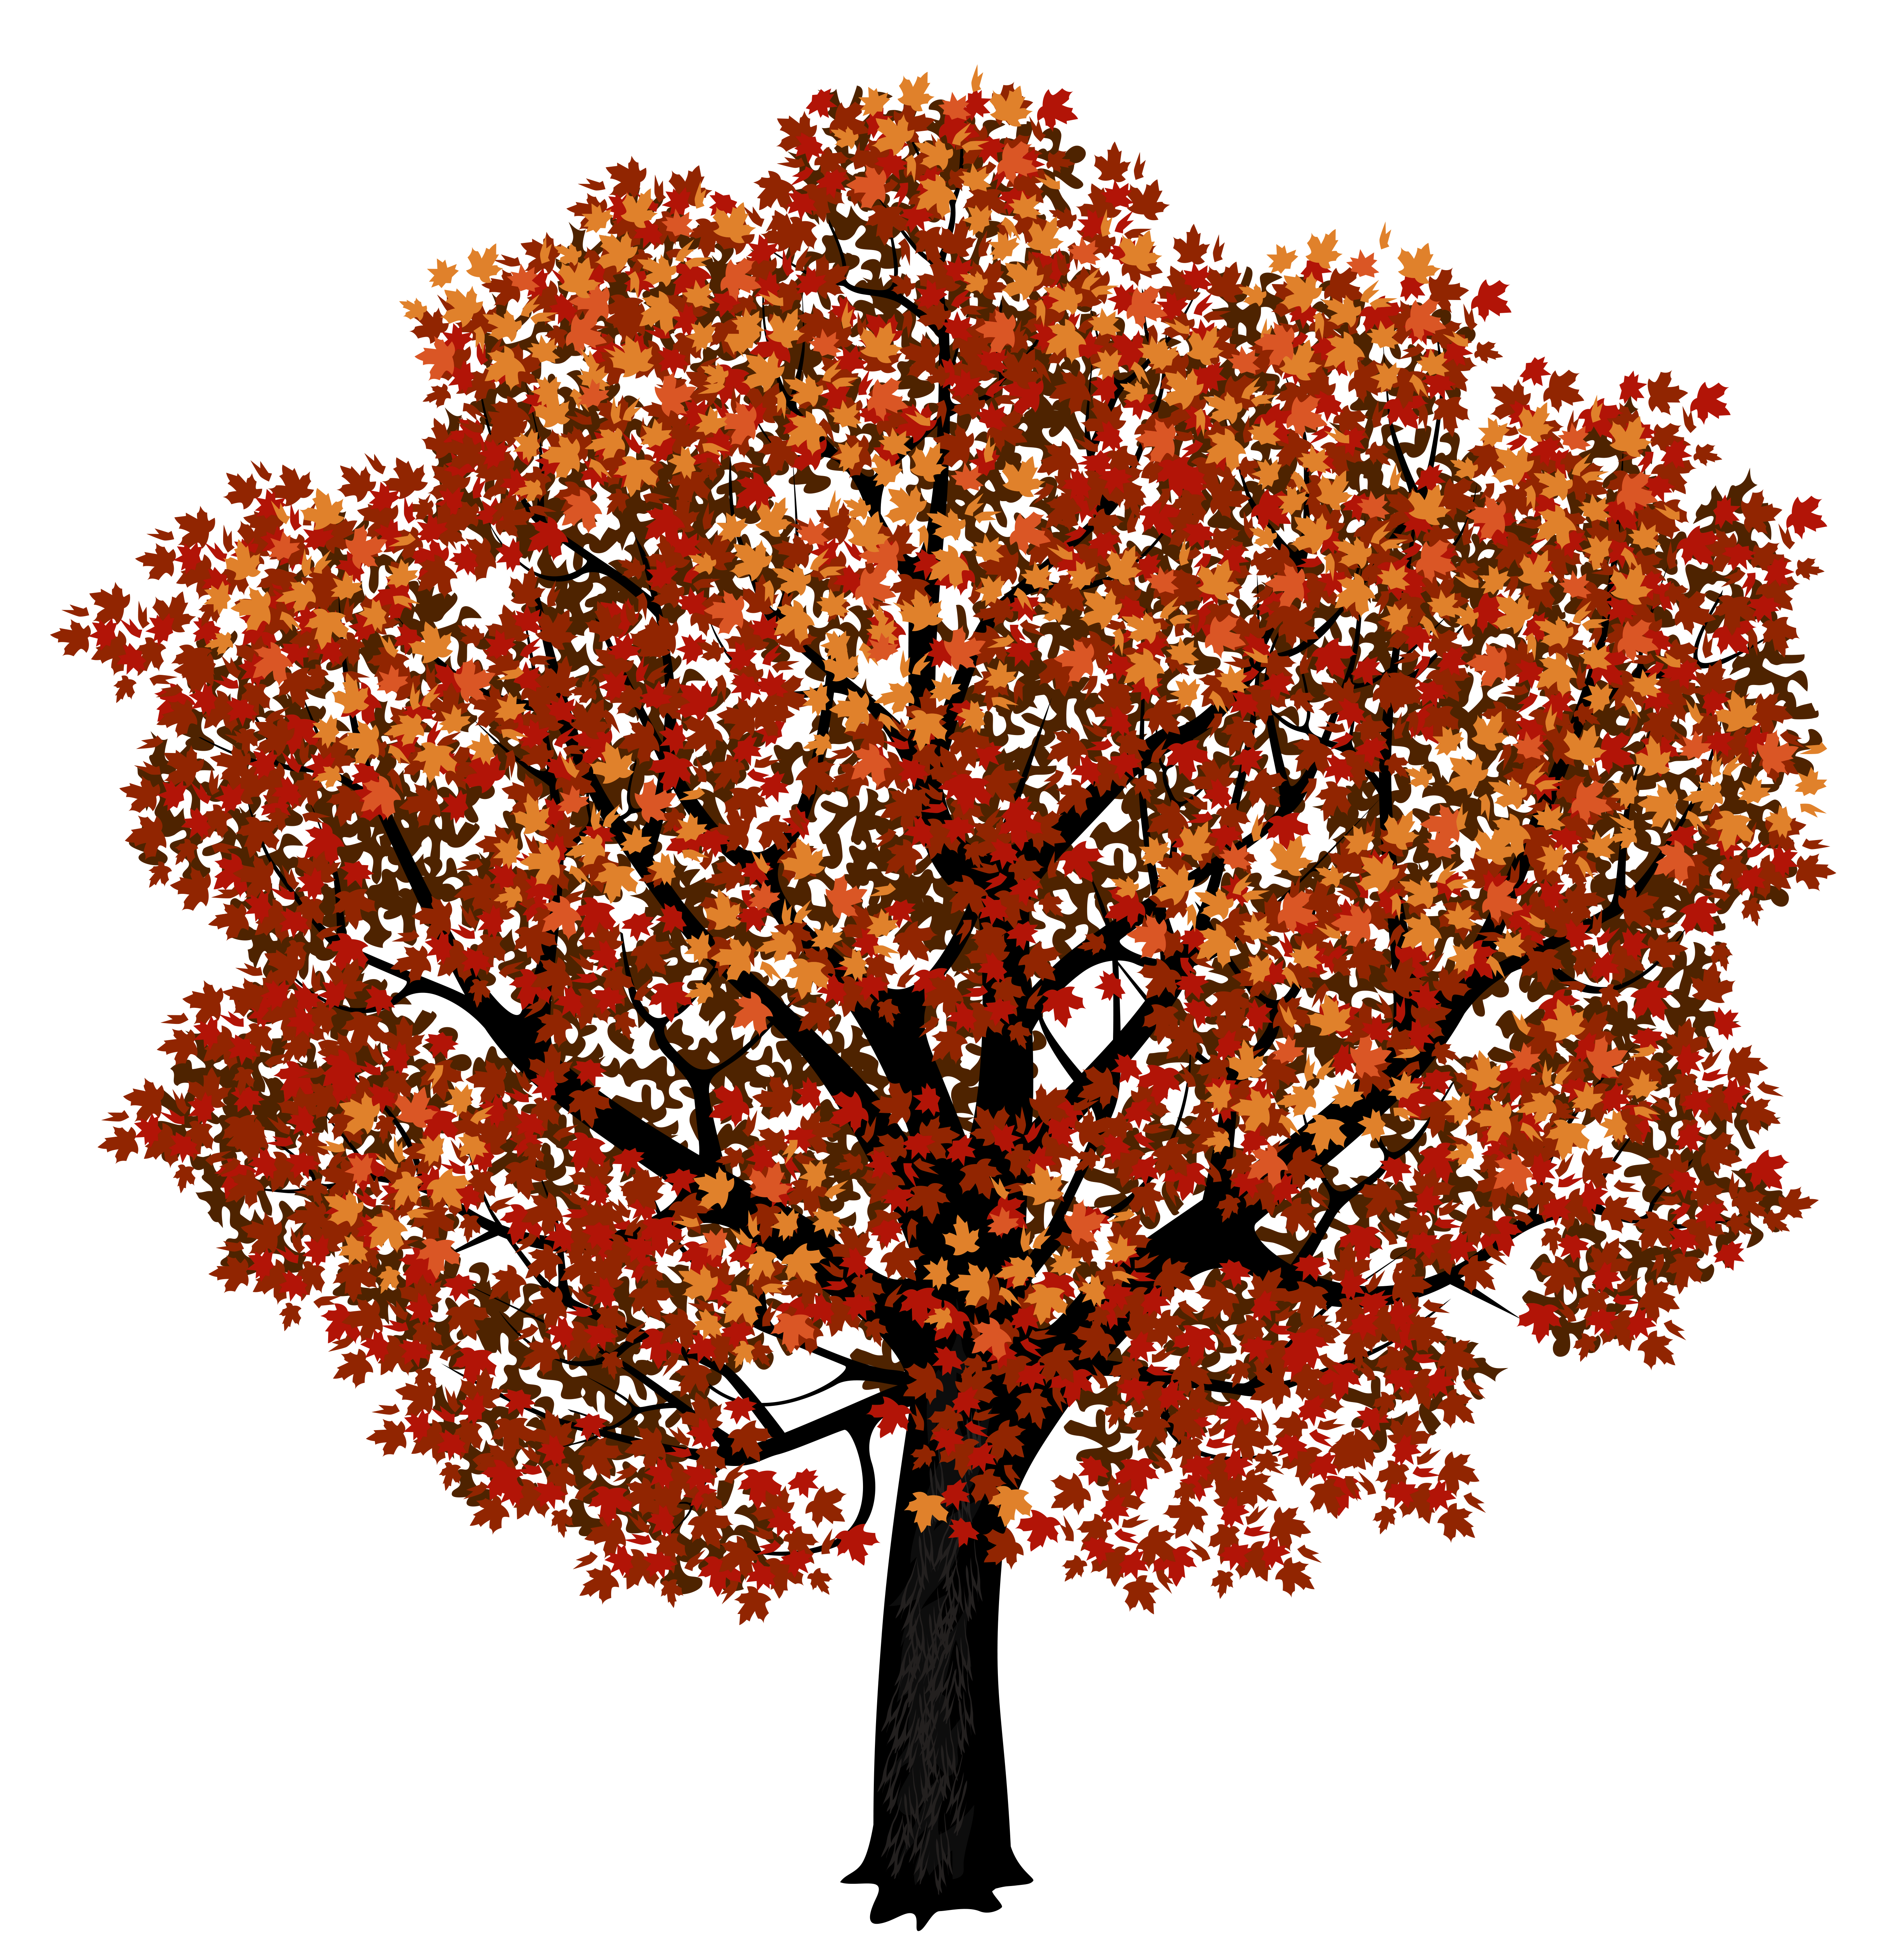 Orange Maple Tree Clipart Clipground